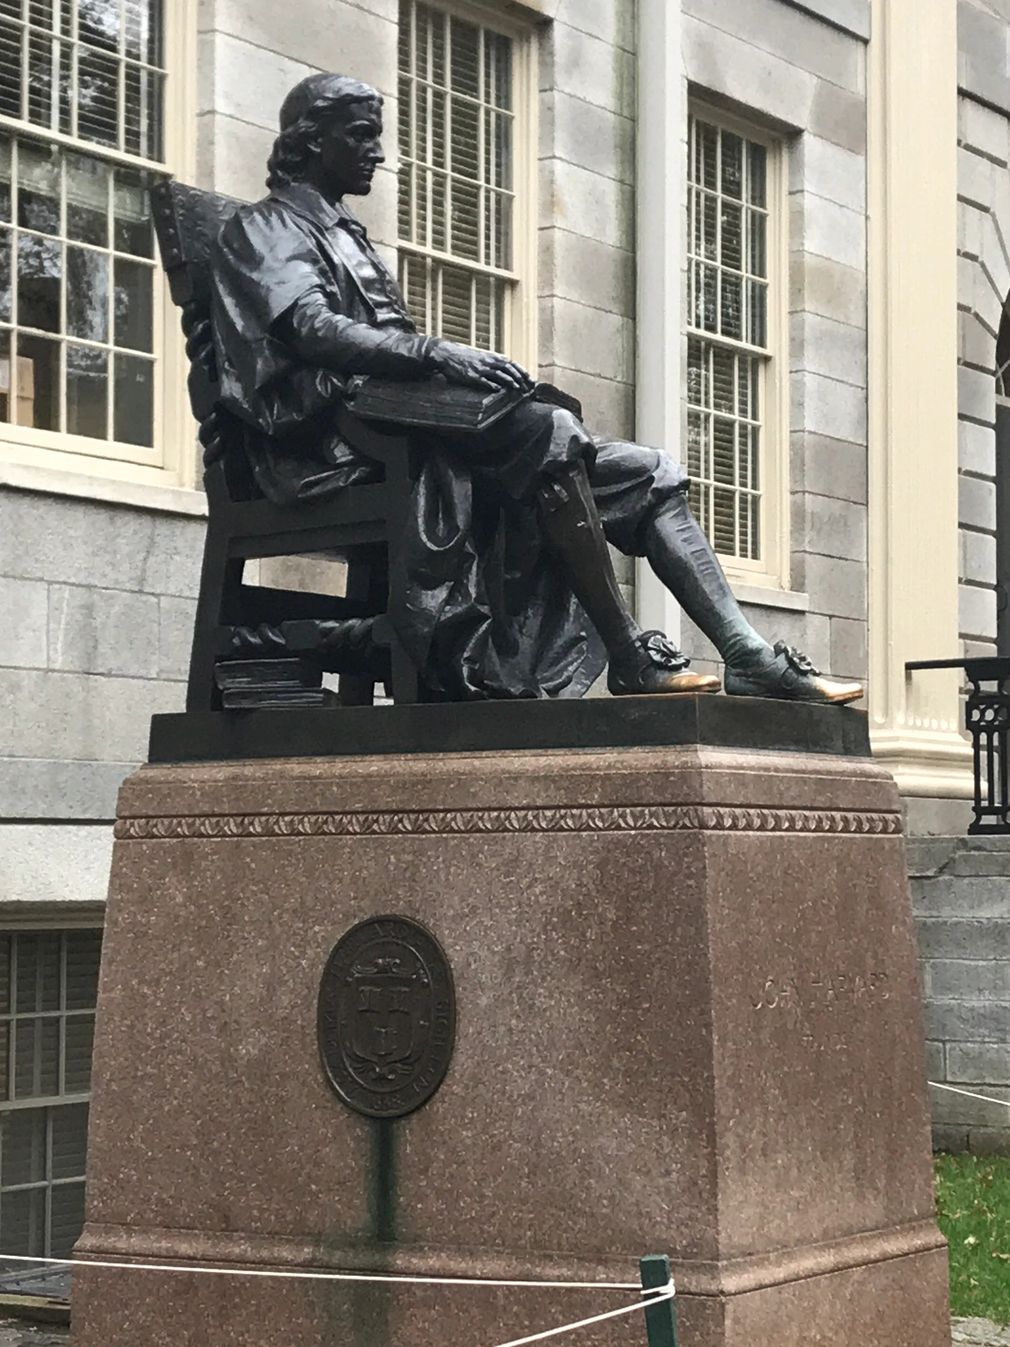 The statue of John Harvard... rub his toe for good luck!